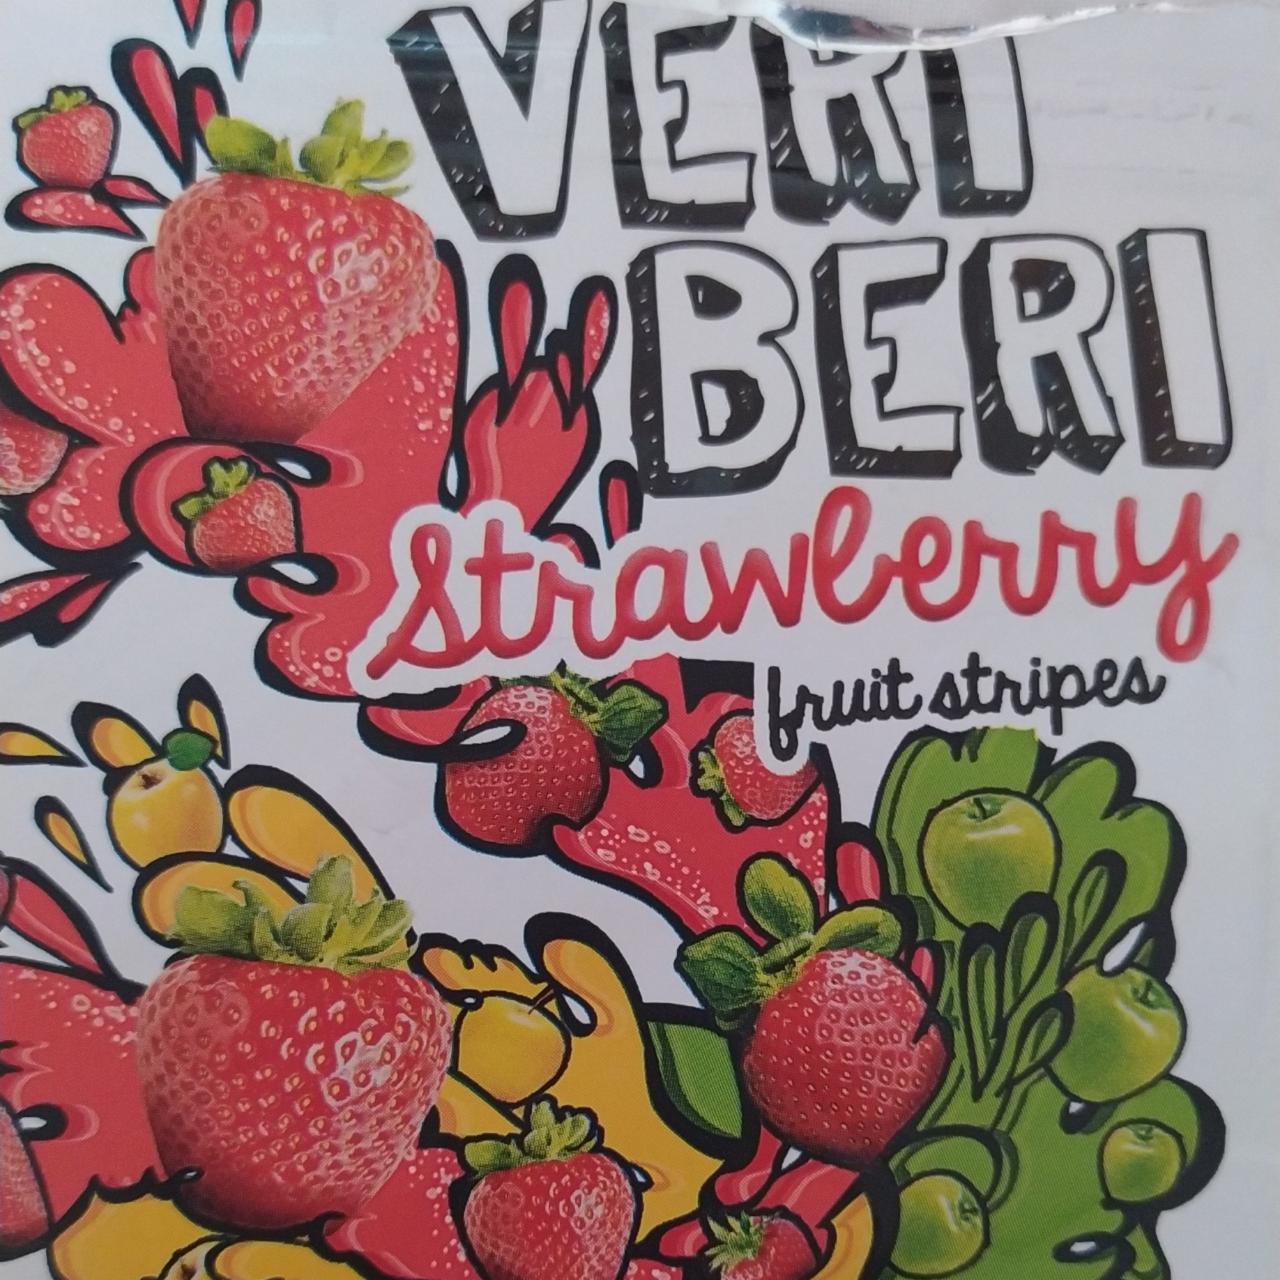 Фото - Stripes strawberry клубничная пастила Veri Beri